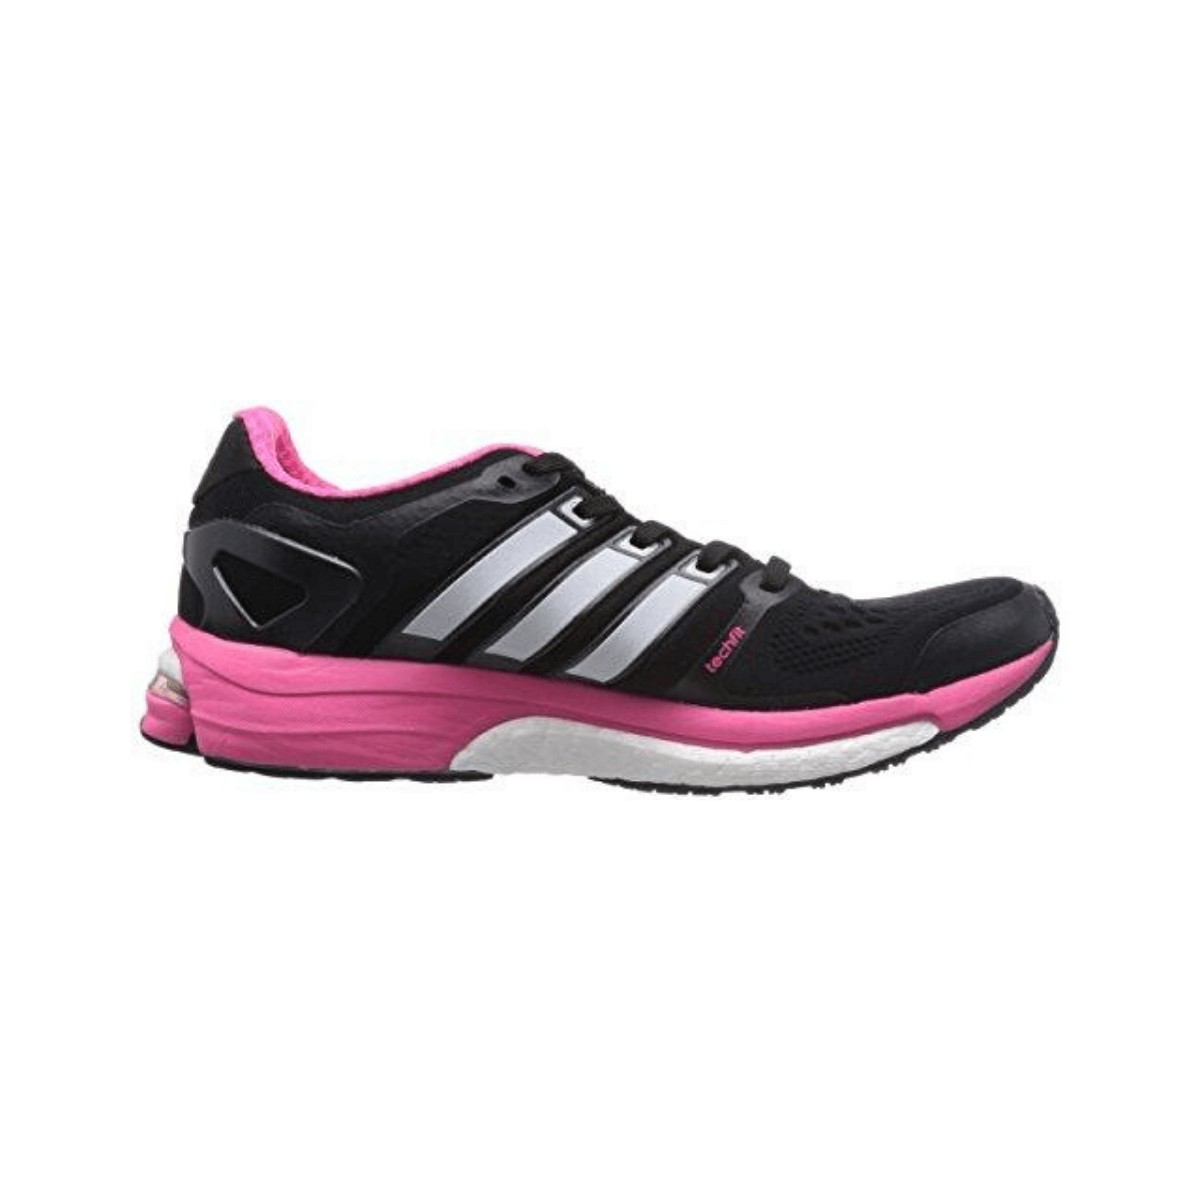 Adidas Adistar Boost ESM Black Pink Women's